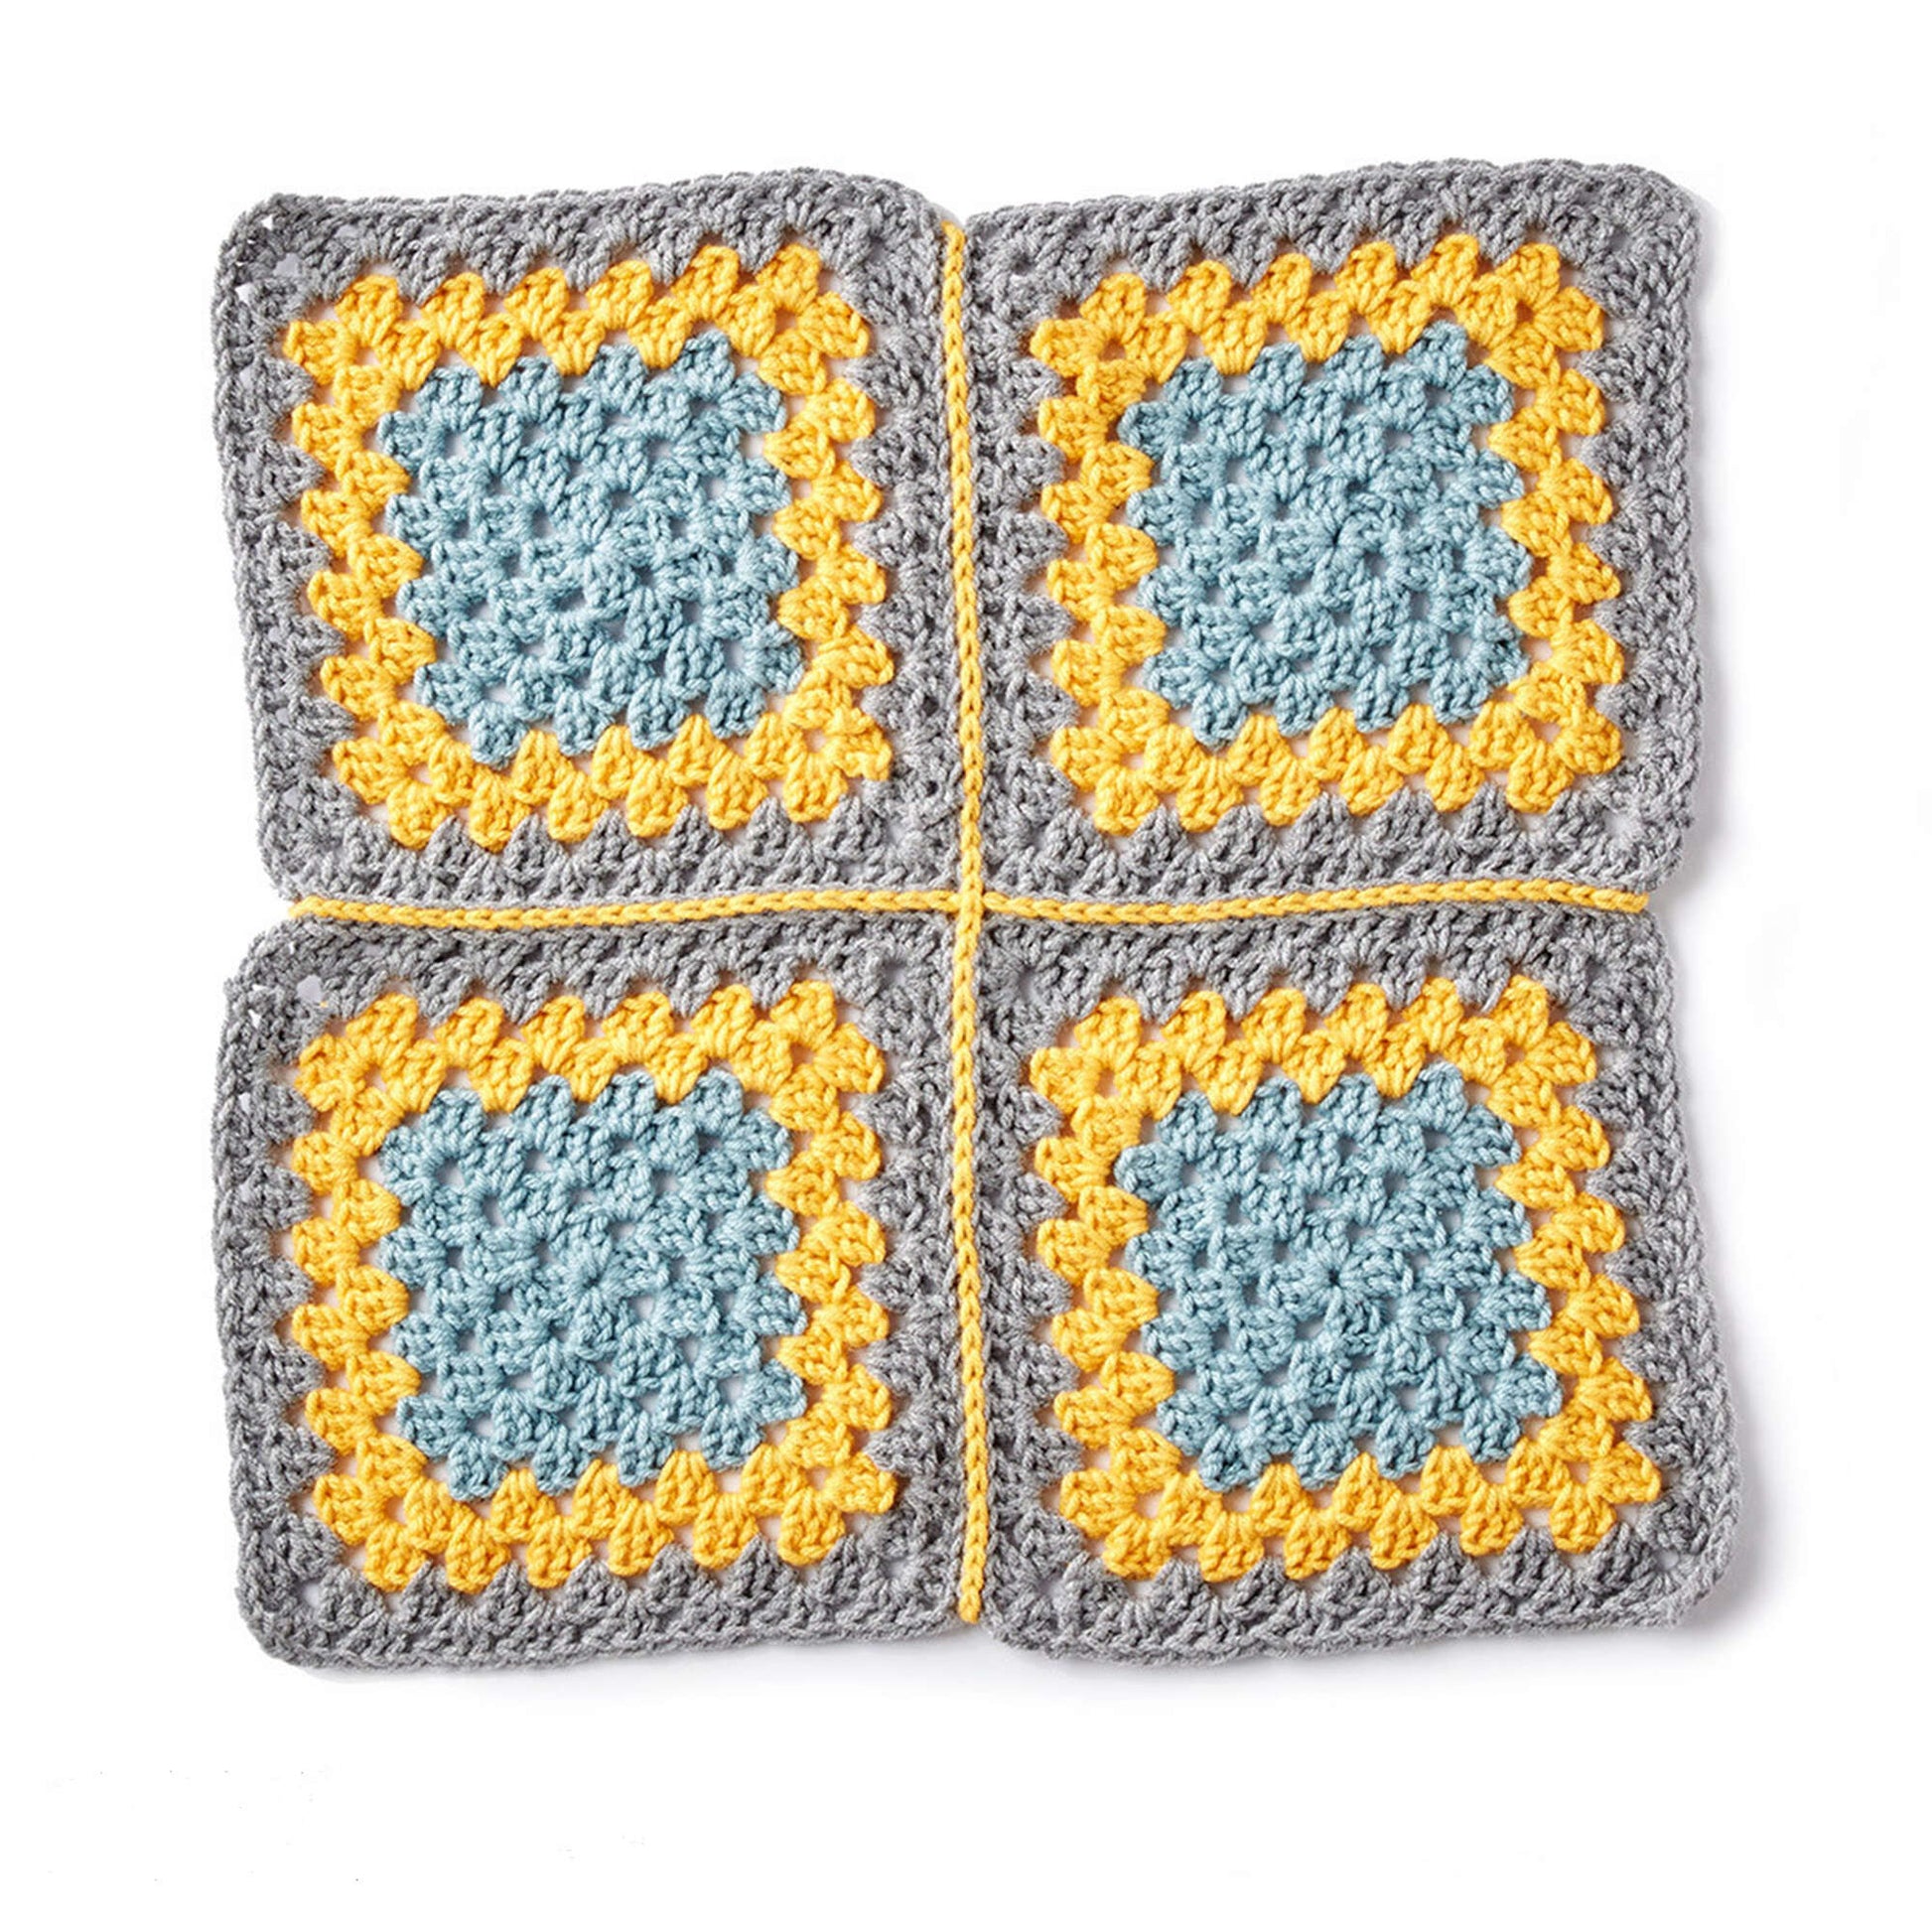 Free Caron Diamond Crochet Granny Afghan Pattern